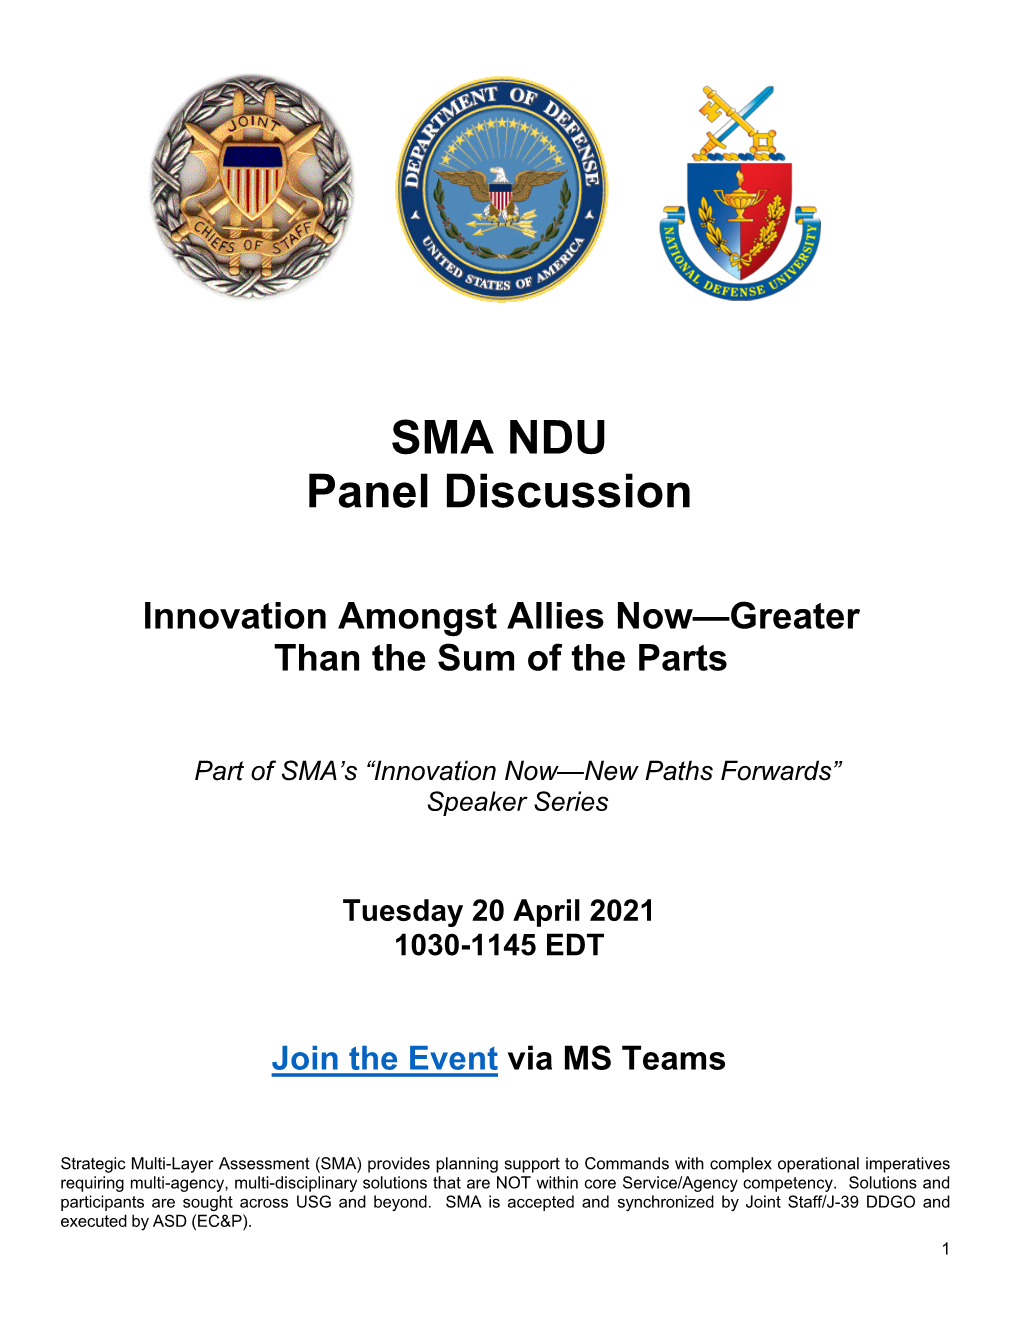 SMA NDU Panel Discussion- Innovation Among Allies